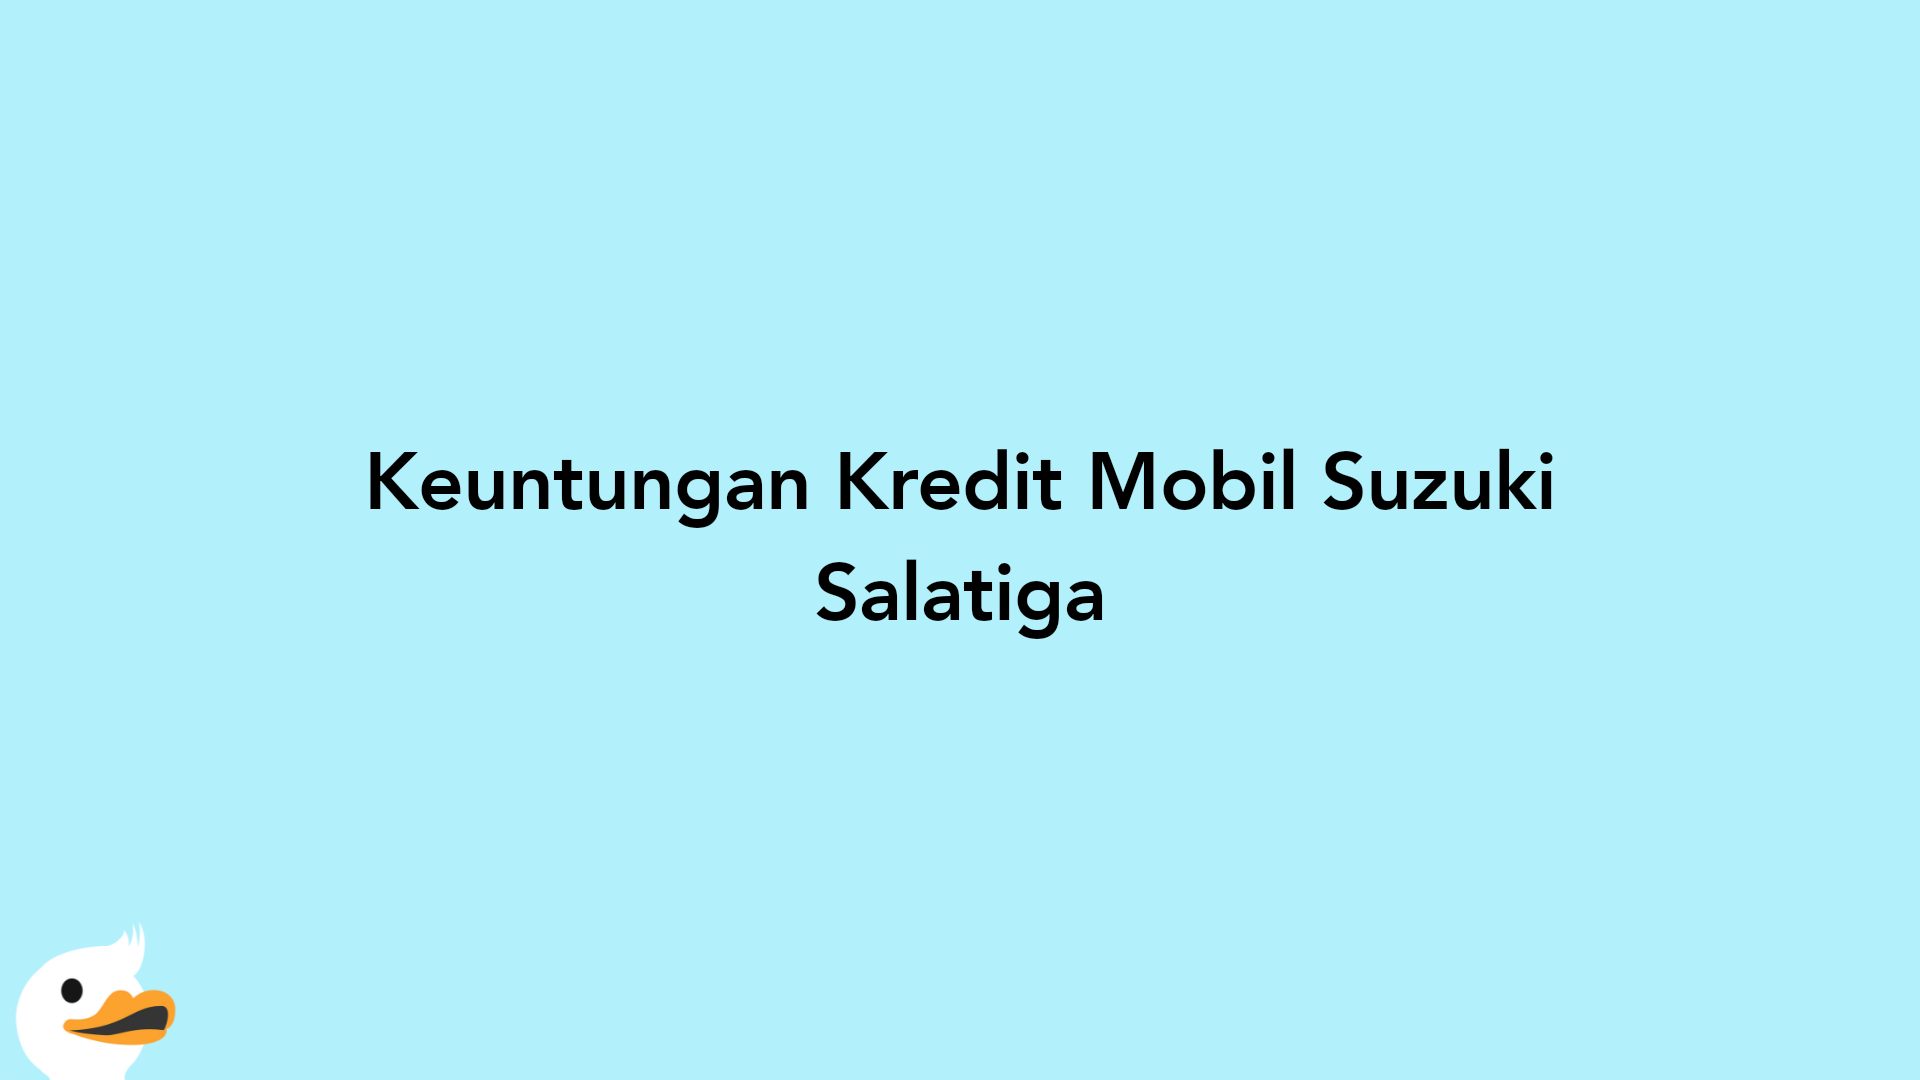 Keuntungan Kredit Mobil Suzuki Salatiga